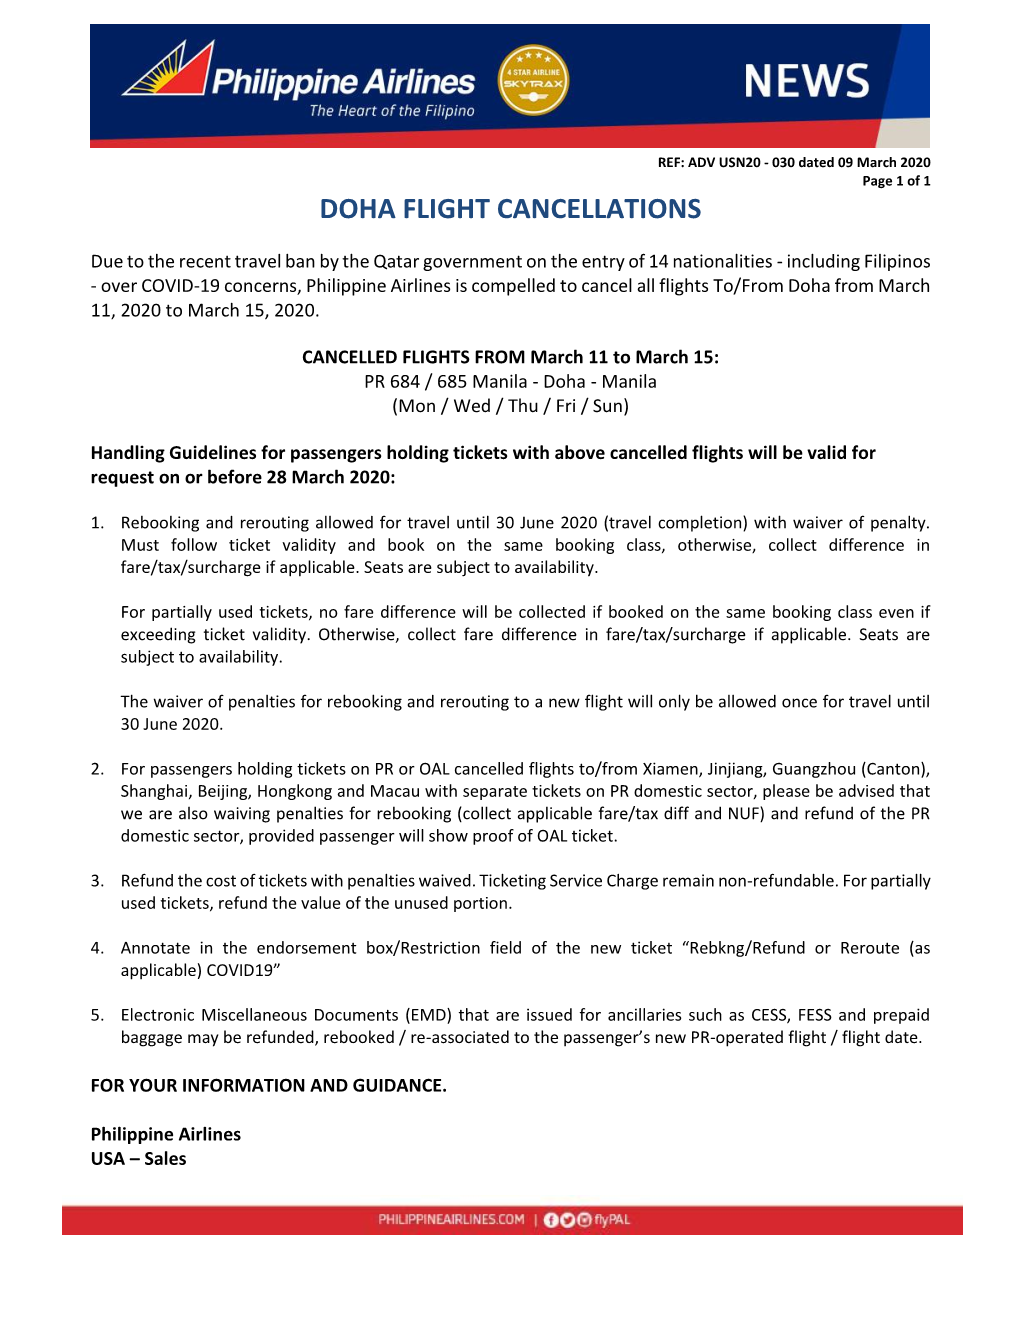 Doha Flight Cancellations